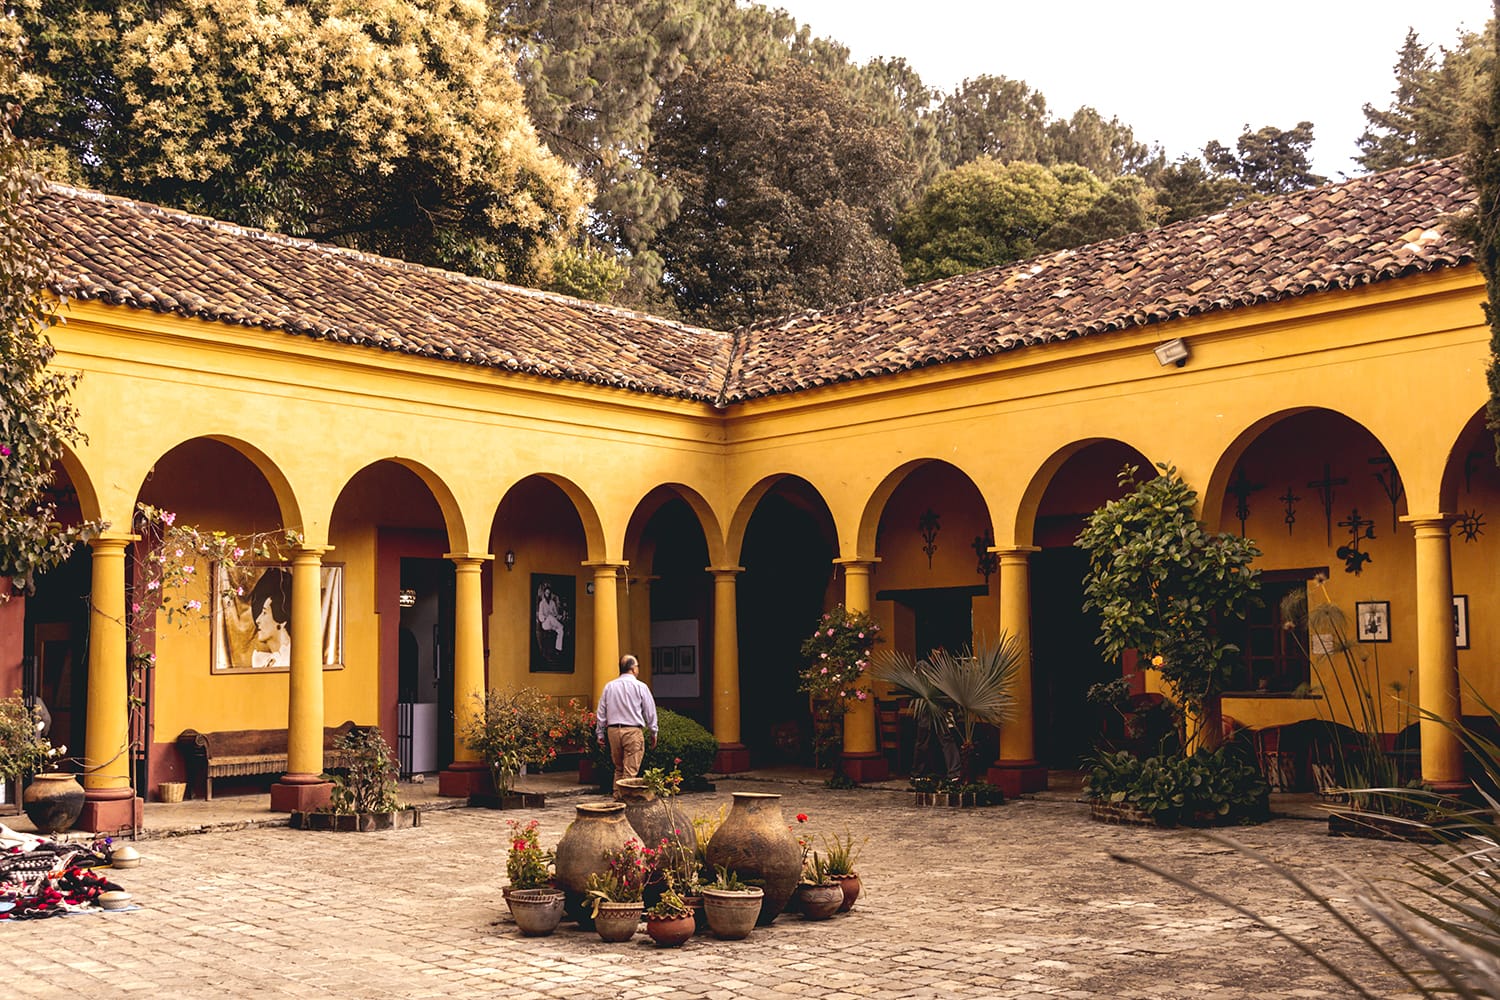 Na Bolom cultural site in San Cristobal de las Casas, Mexico